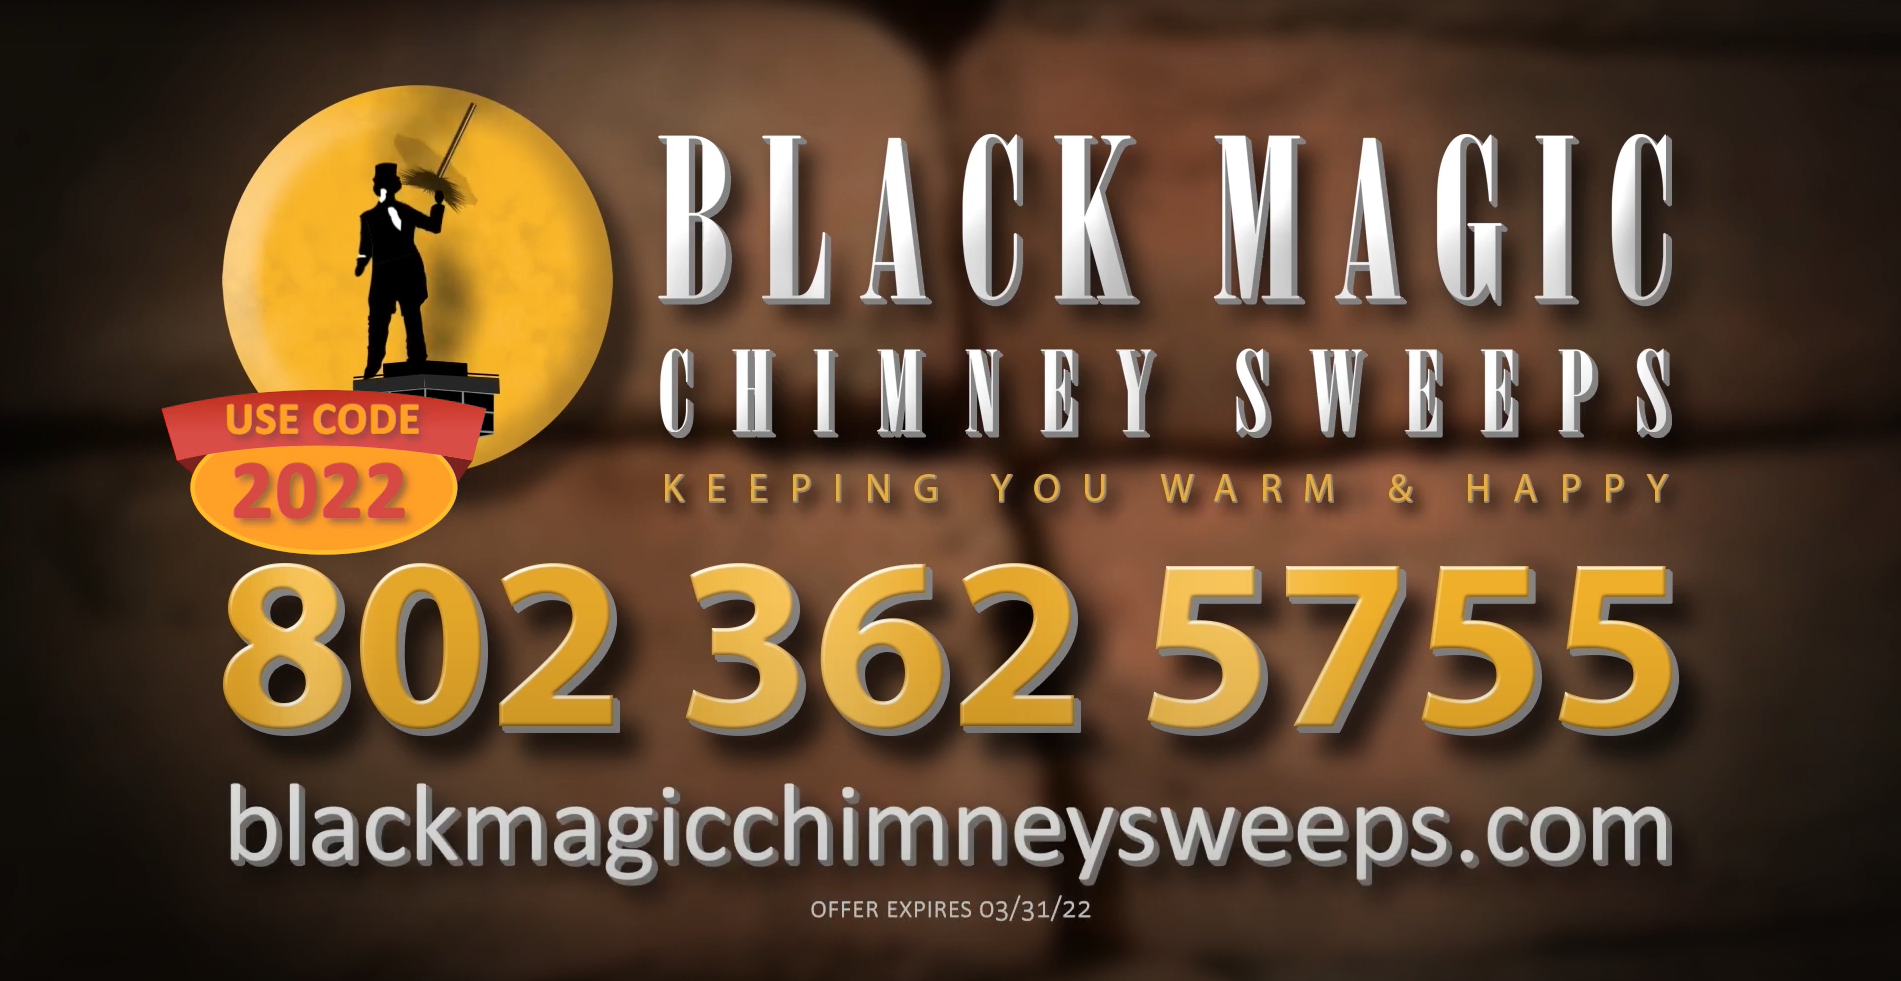 Black Magic Chimney Sweeps